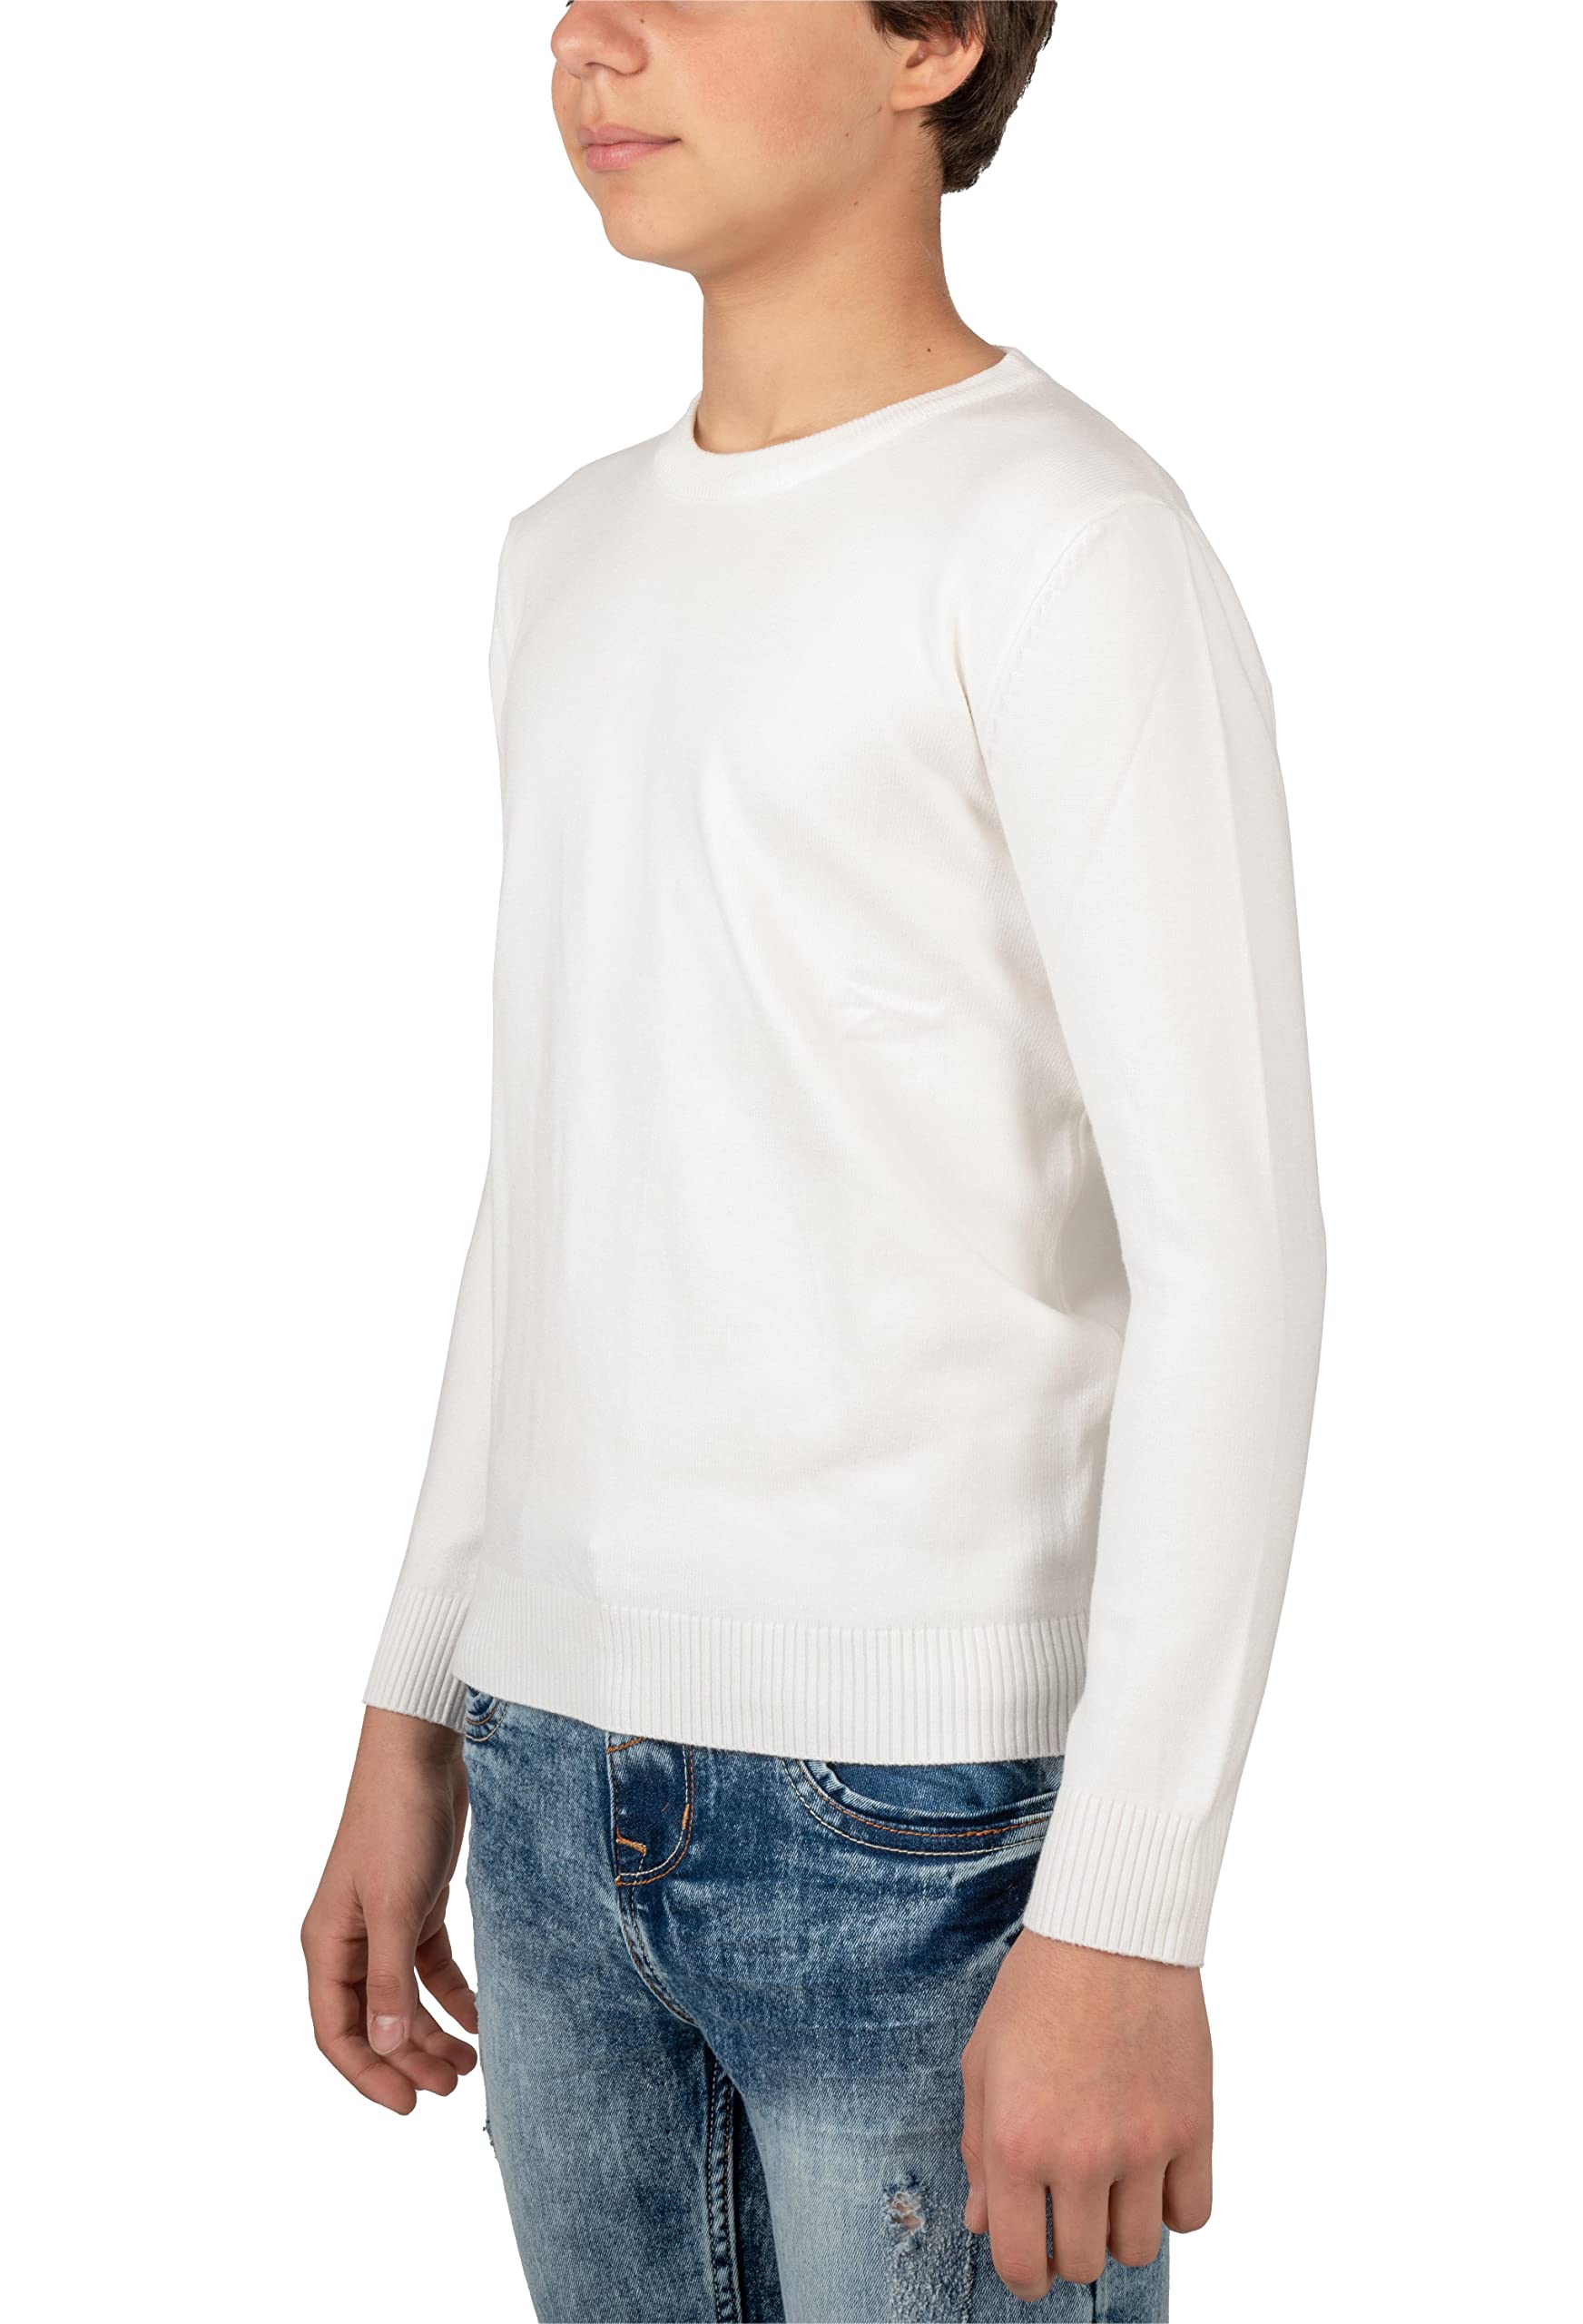 X RAY Boys' Fashion Baby Boy Clothes | Crew Neck Boys Sweater | Kid's Pullover Sweatshirt